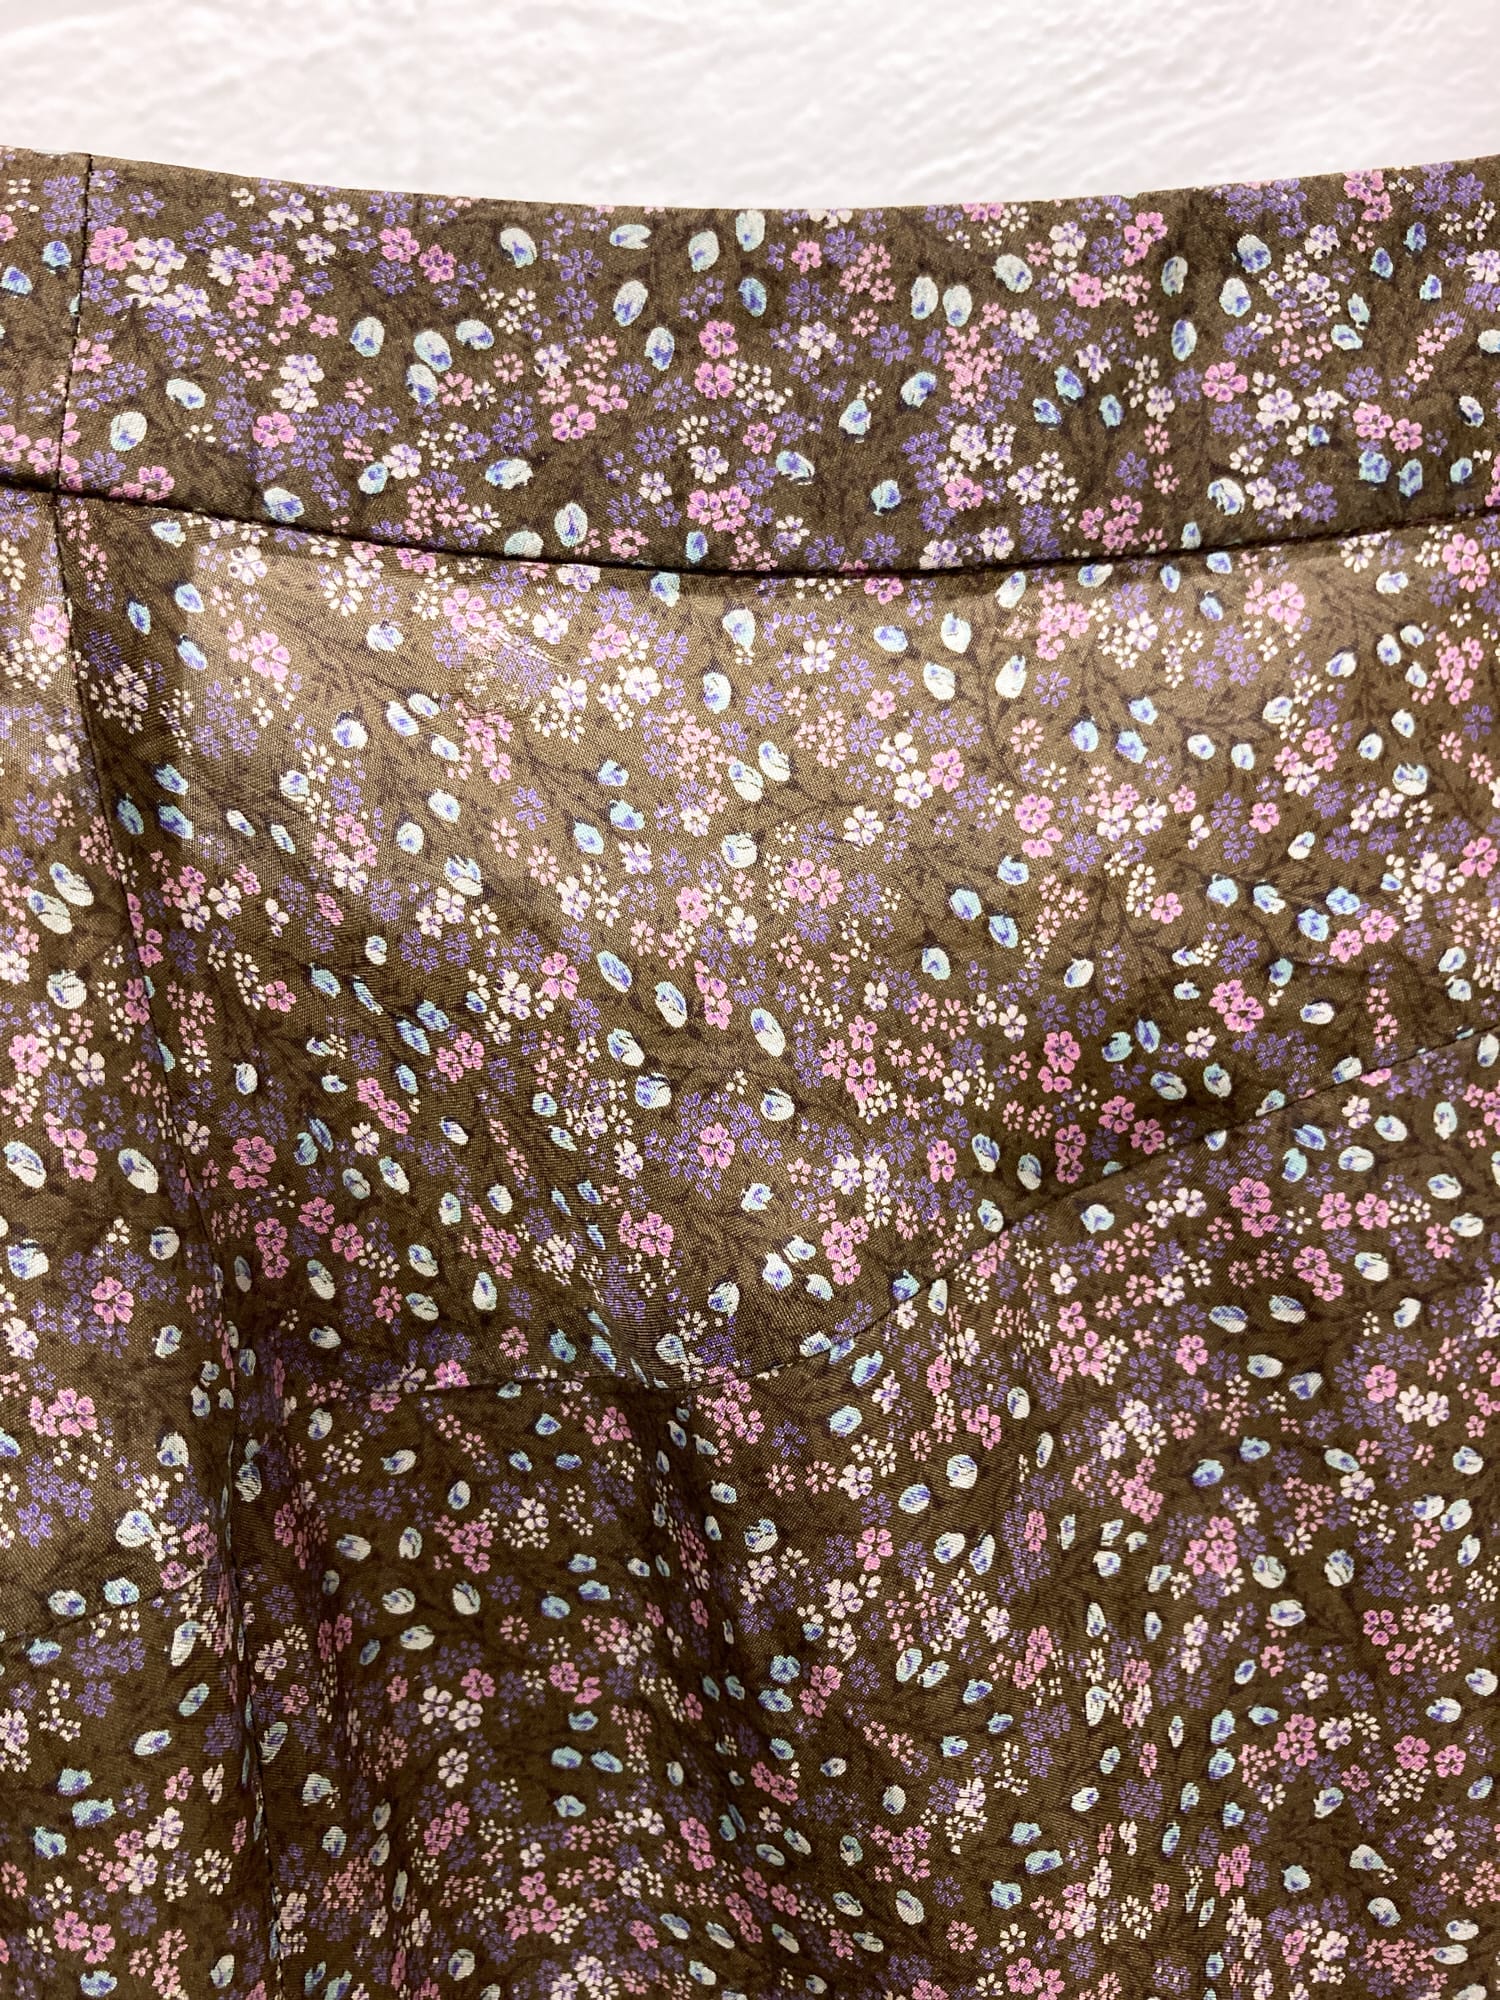 Veronique Branquinho brown purple floral print silk asymmetrical skirt - sz 38